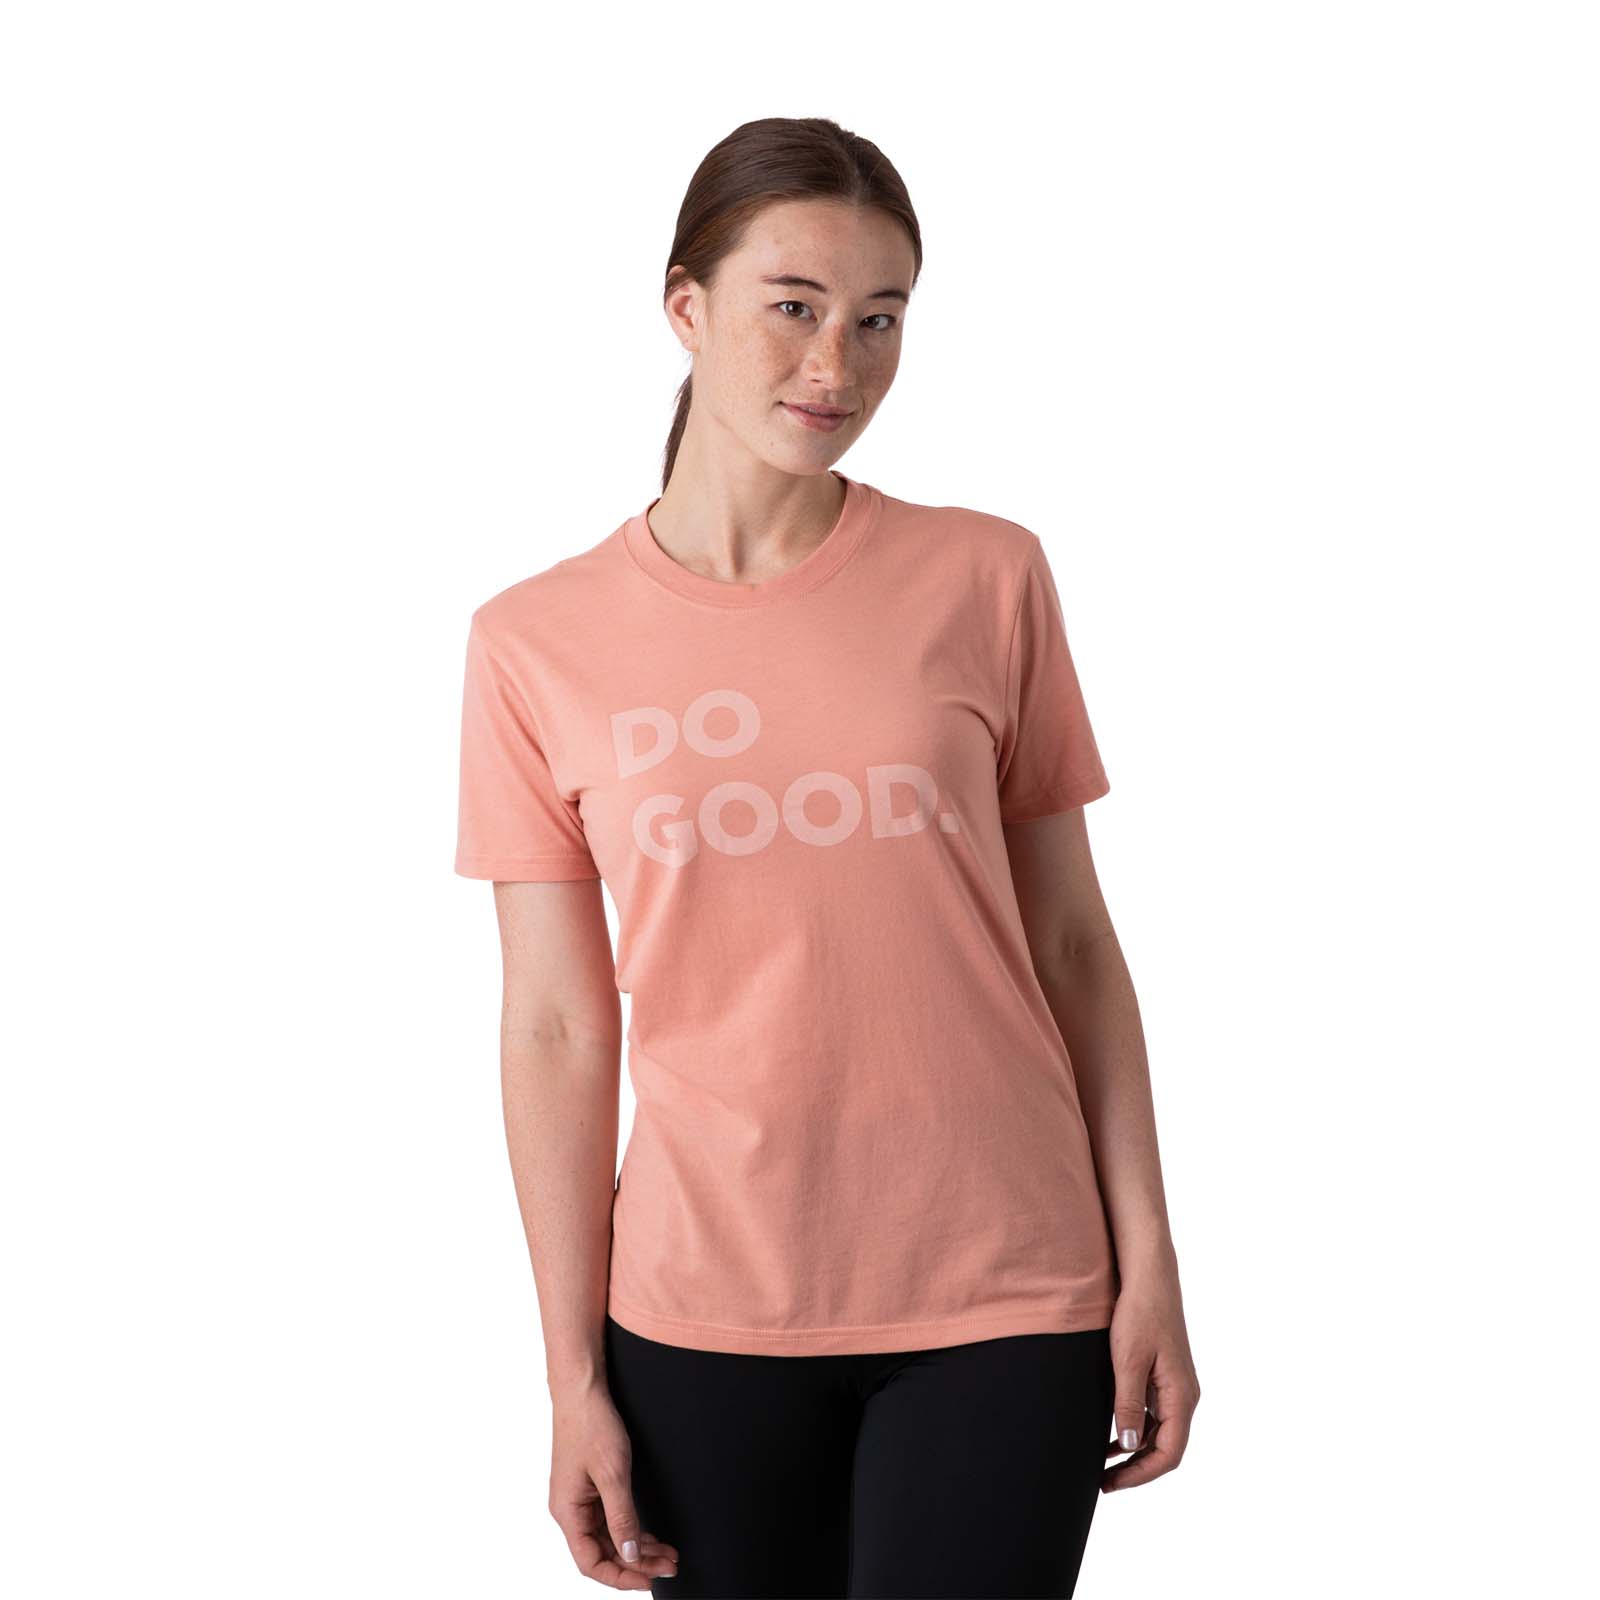 Cotopaxi Do Good - Camiseta - Mujer